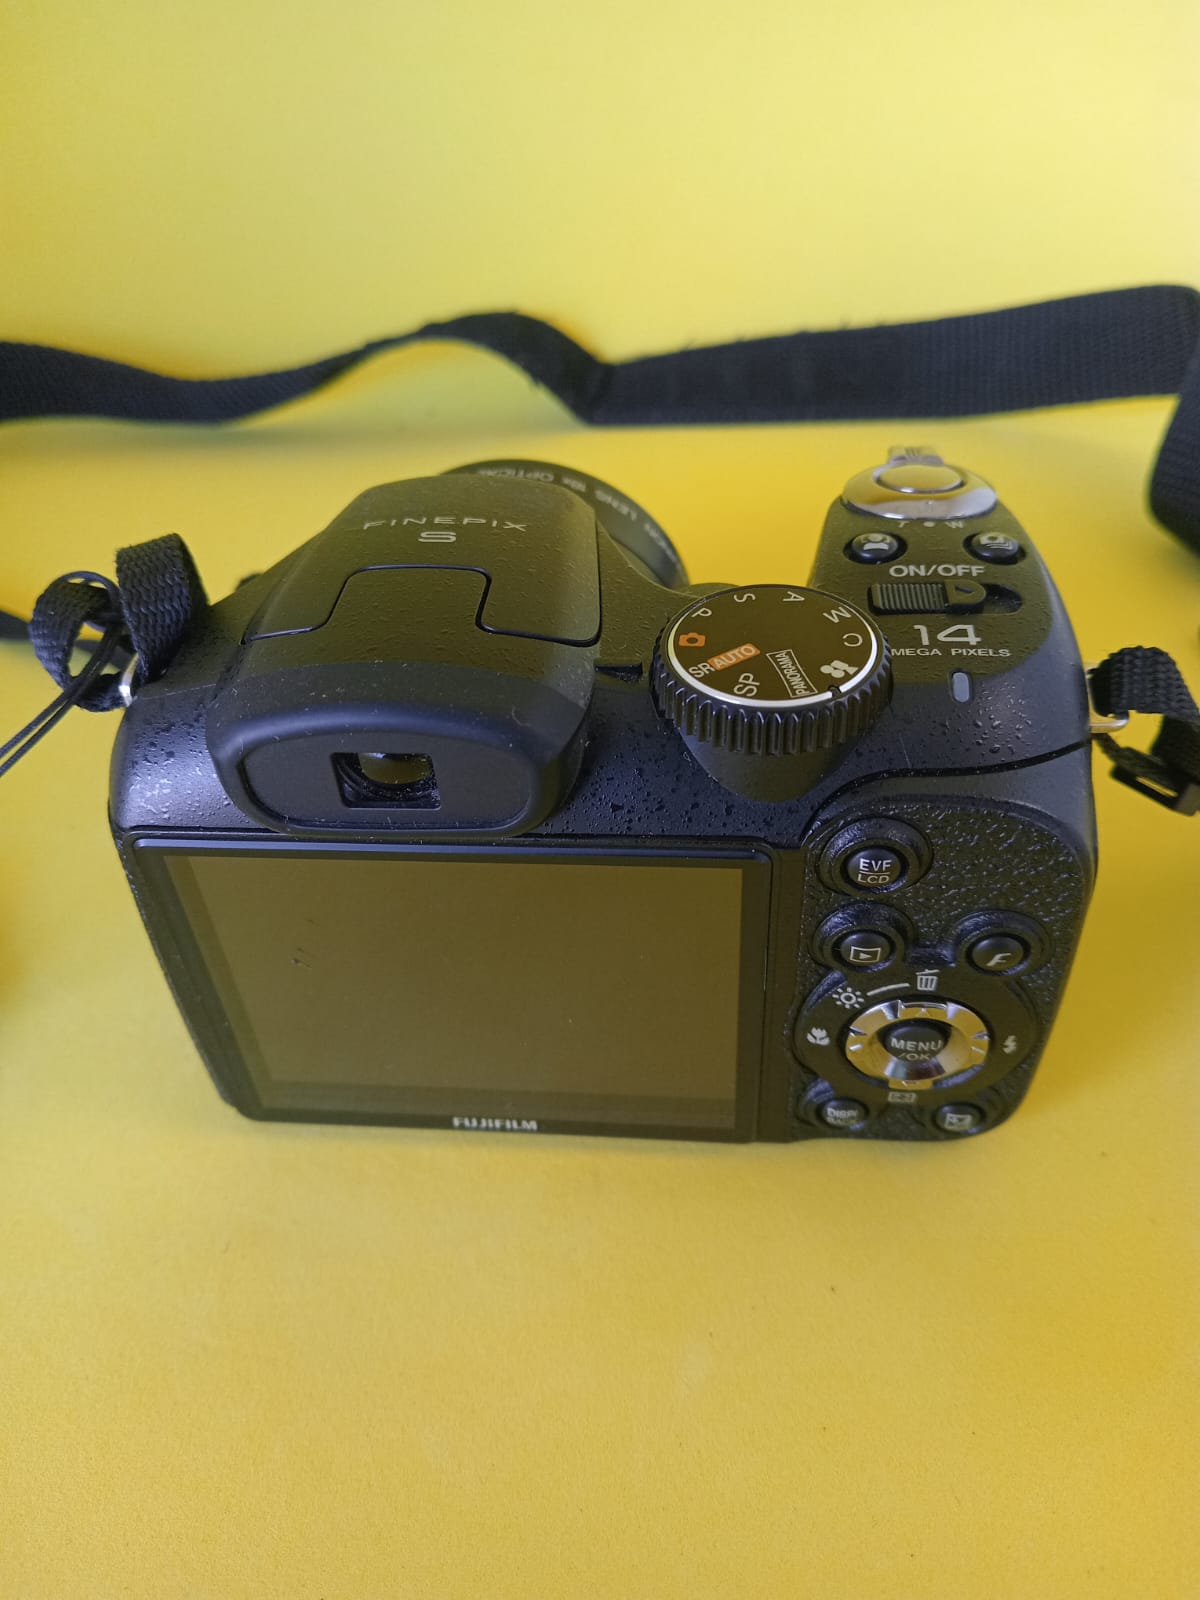 USED Canon PowerShot SX60 HS Camera - Black | Digital Bridge Camera